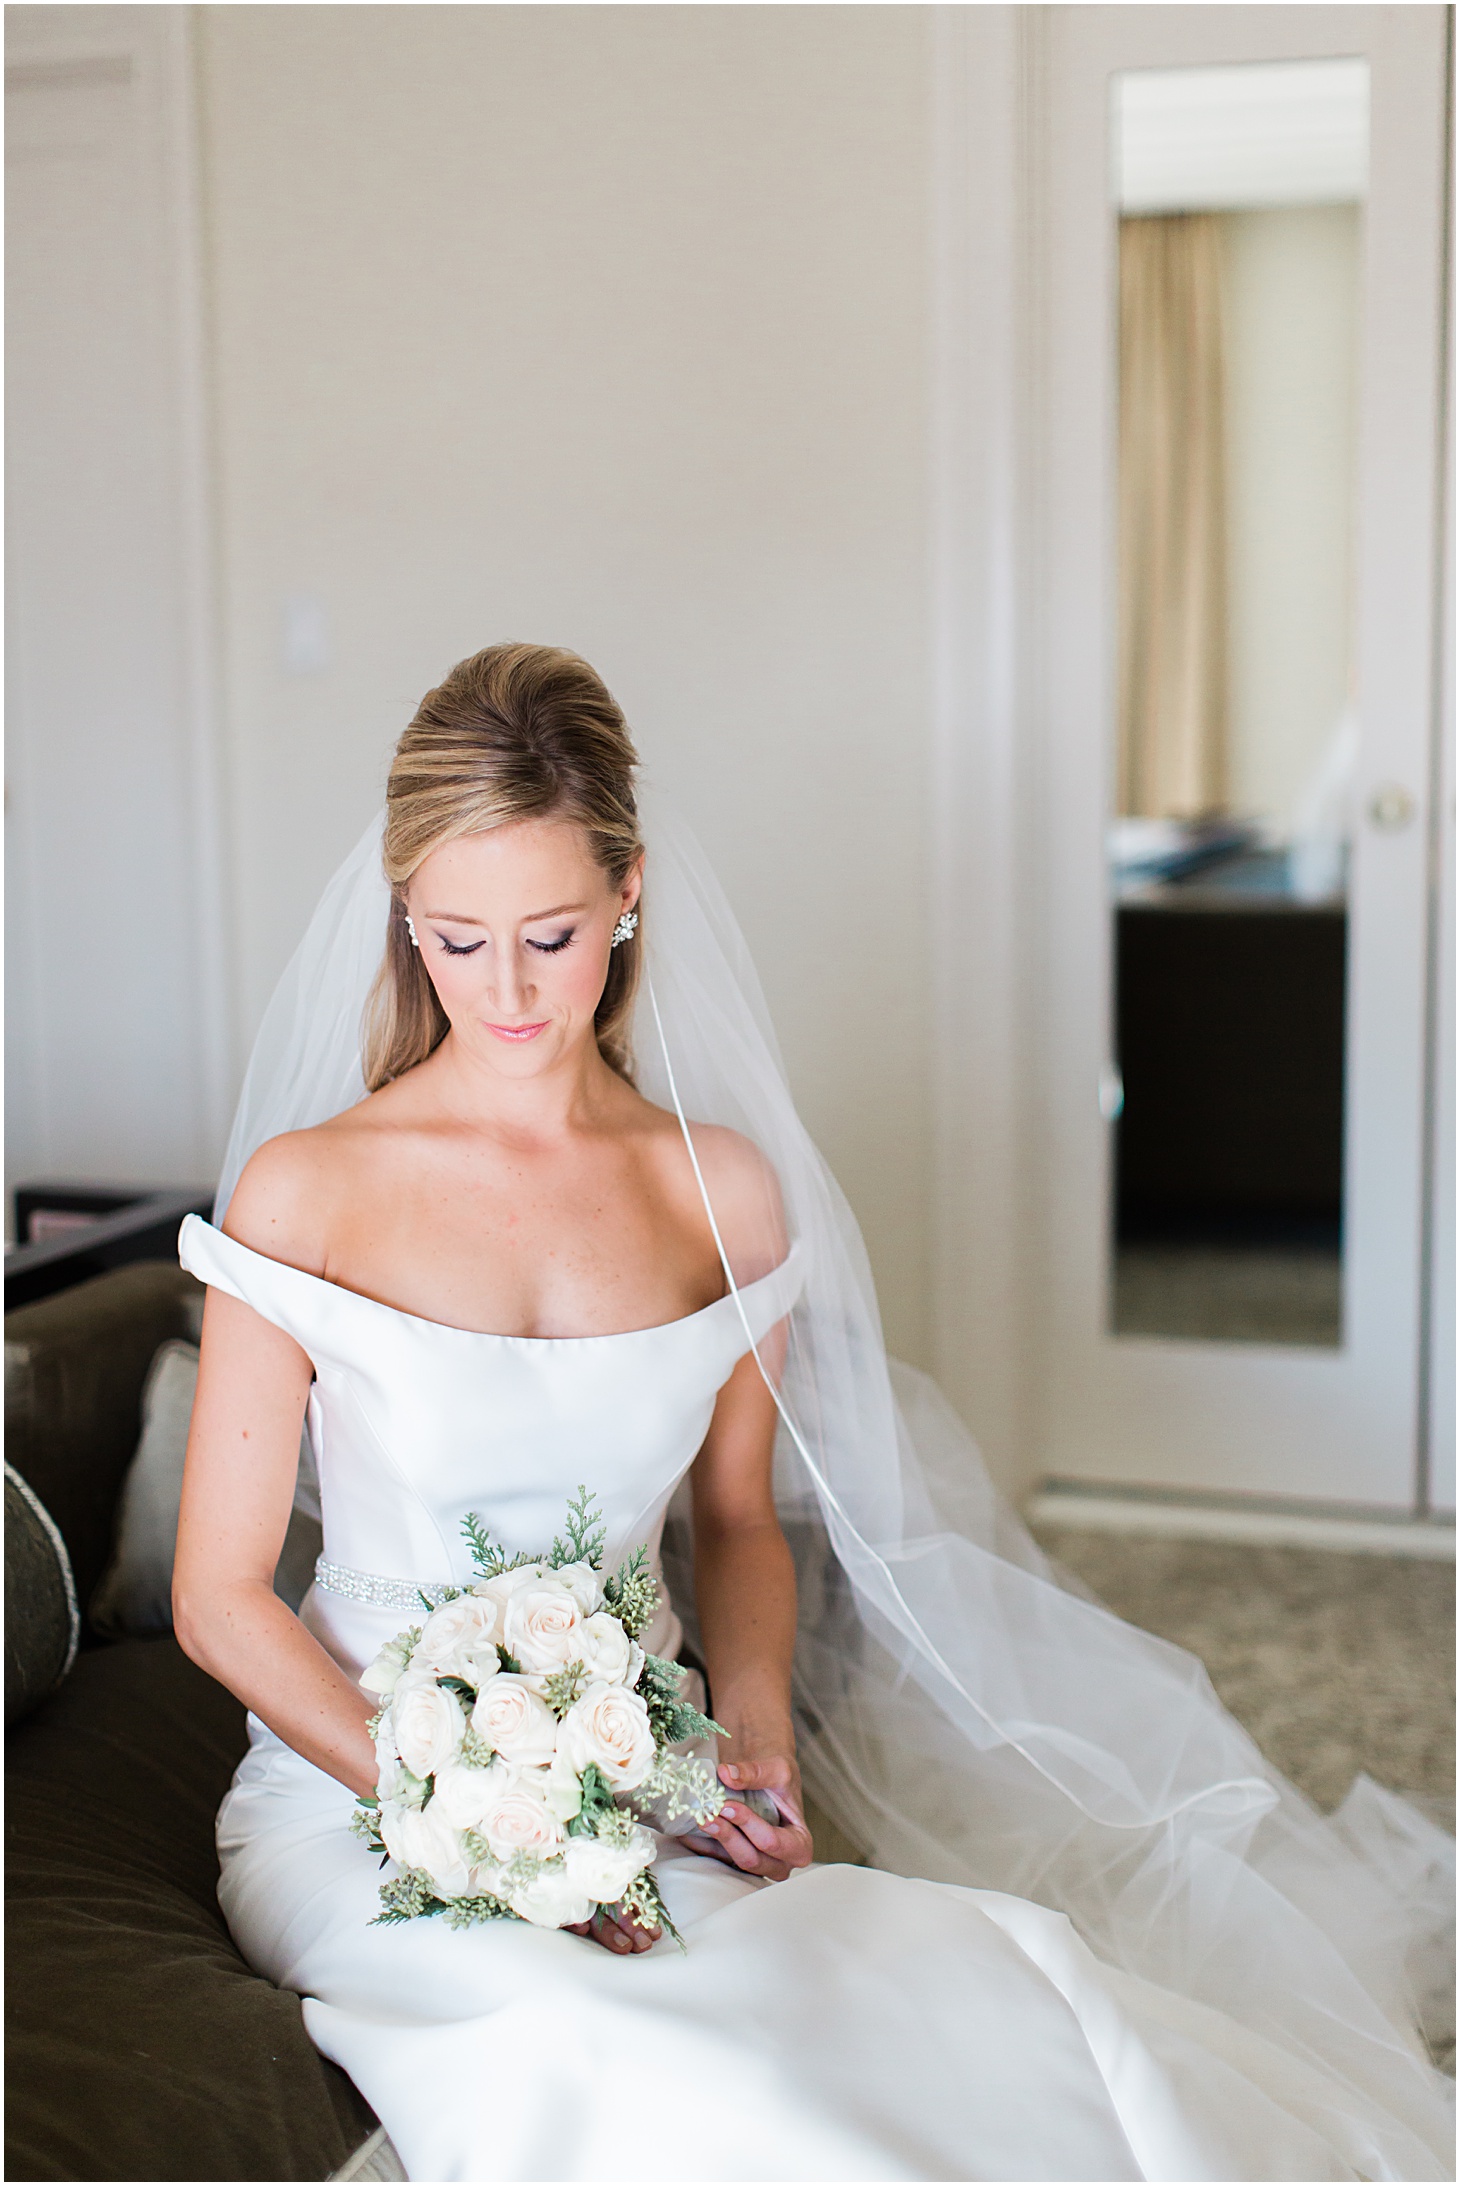 Lela Rose Bride at Four Seasons Hotel Washington | Sarah Bradshaw Photography